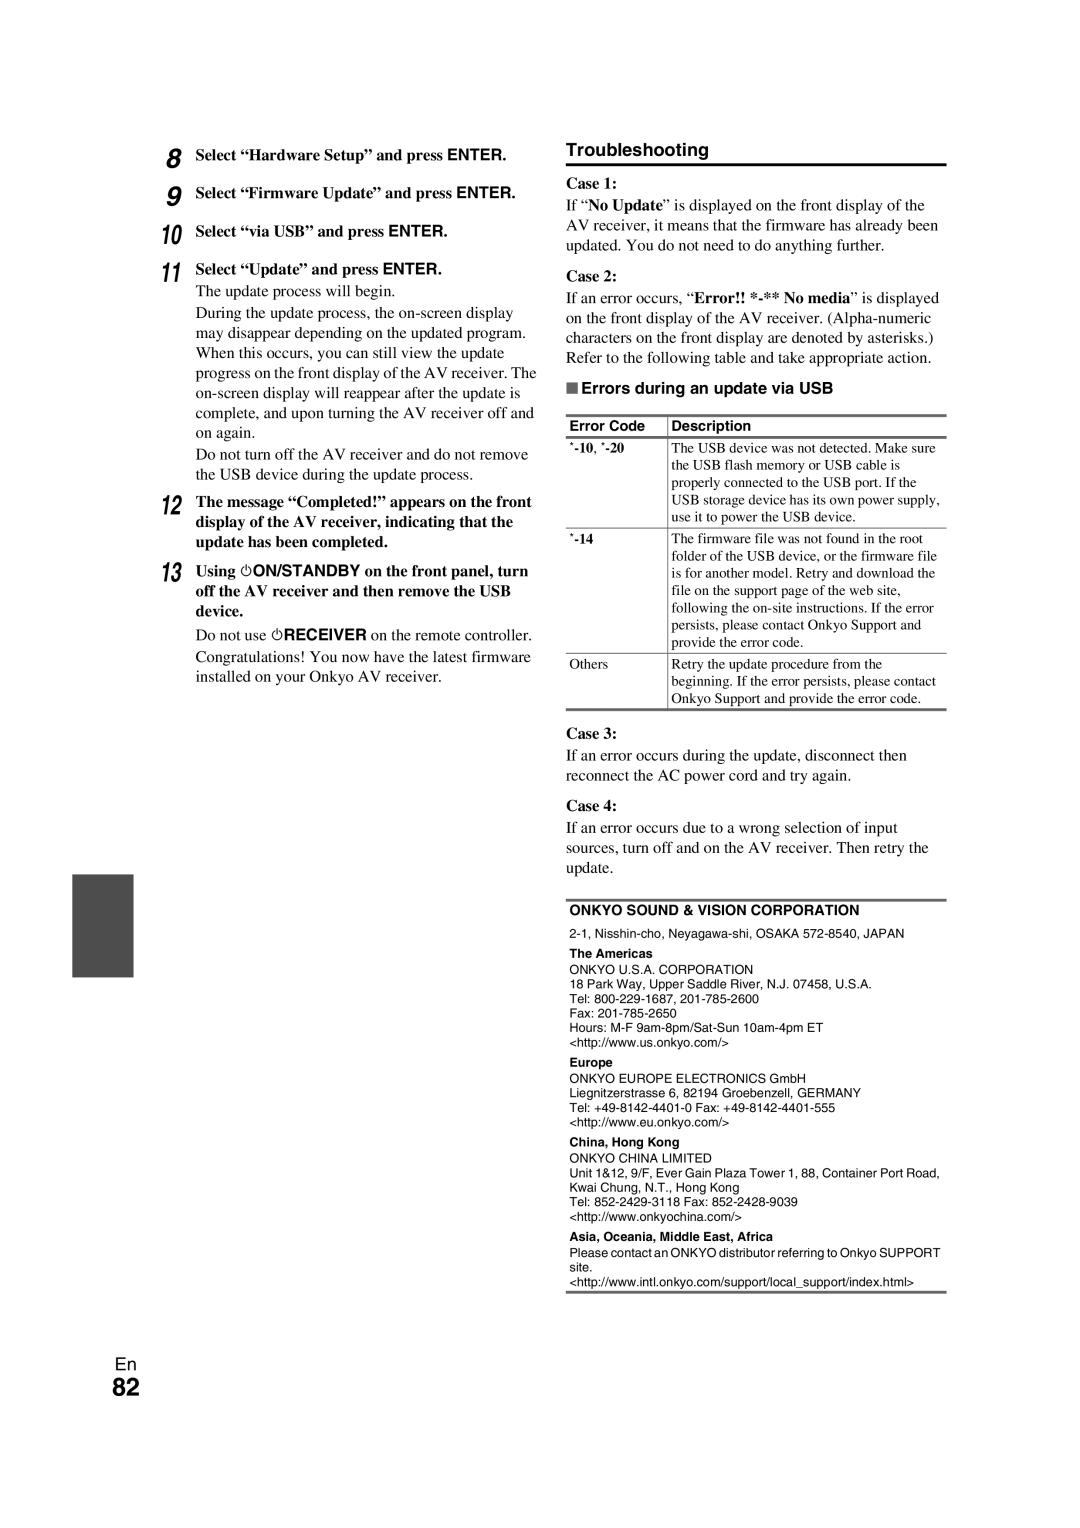 Onkyo TX-NR709 instruction manual Errors during an update via USB, Onkyo Sound & Vision Corporation 